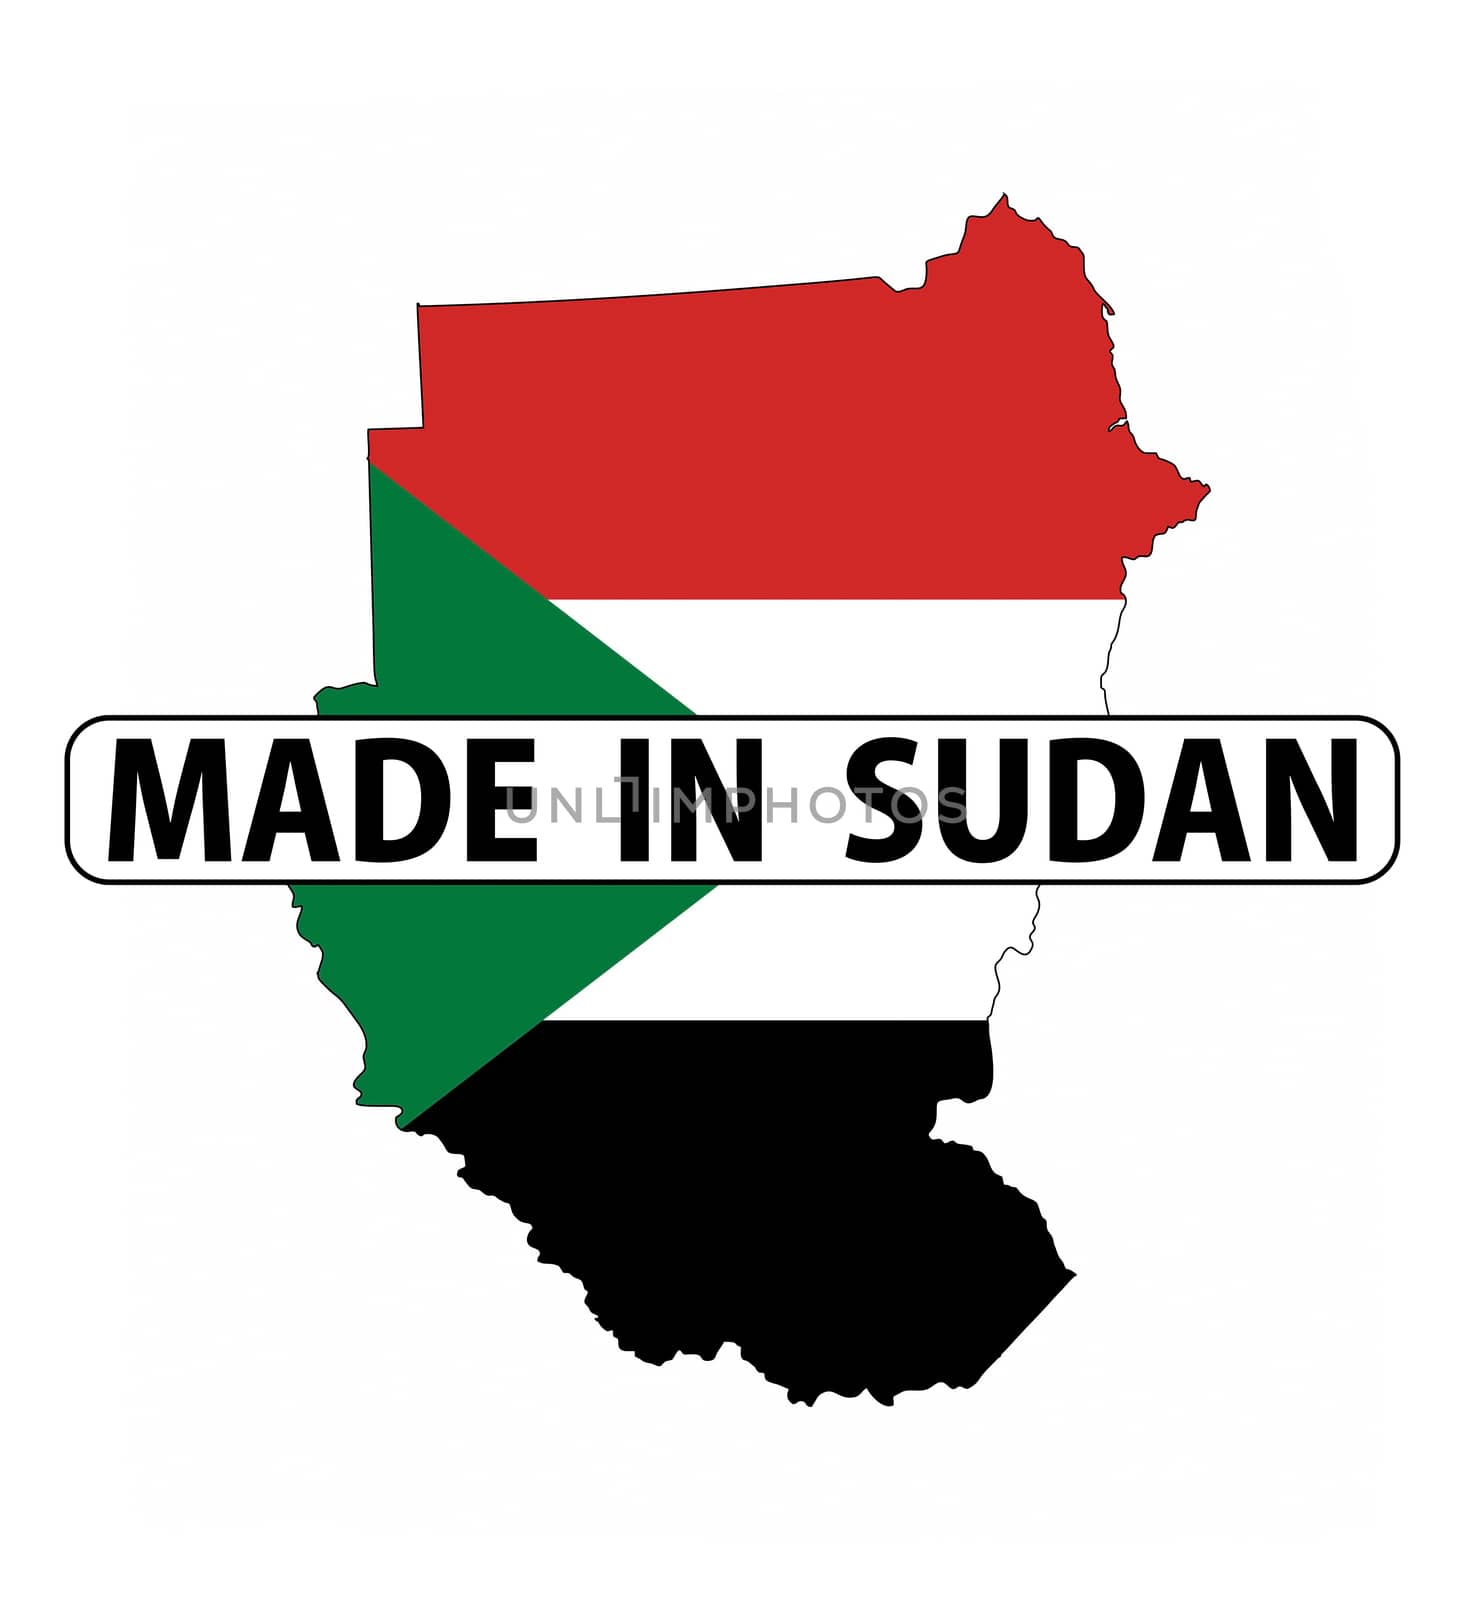 made in sudan by tony4urban